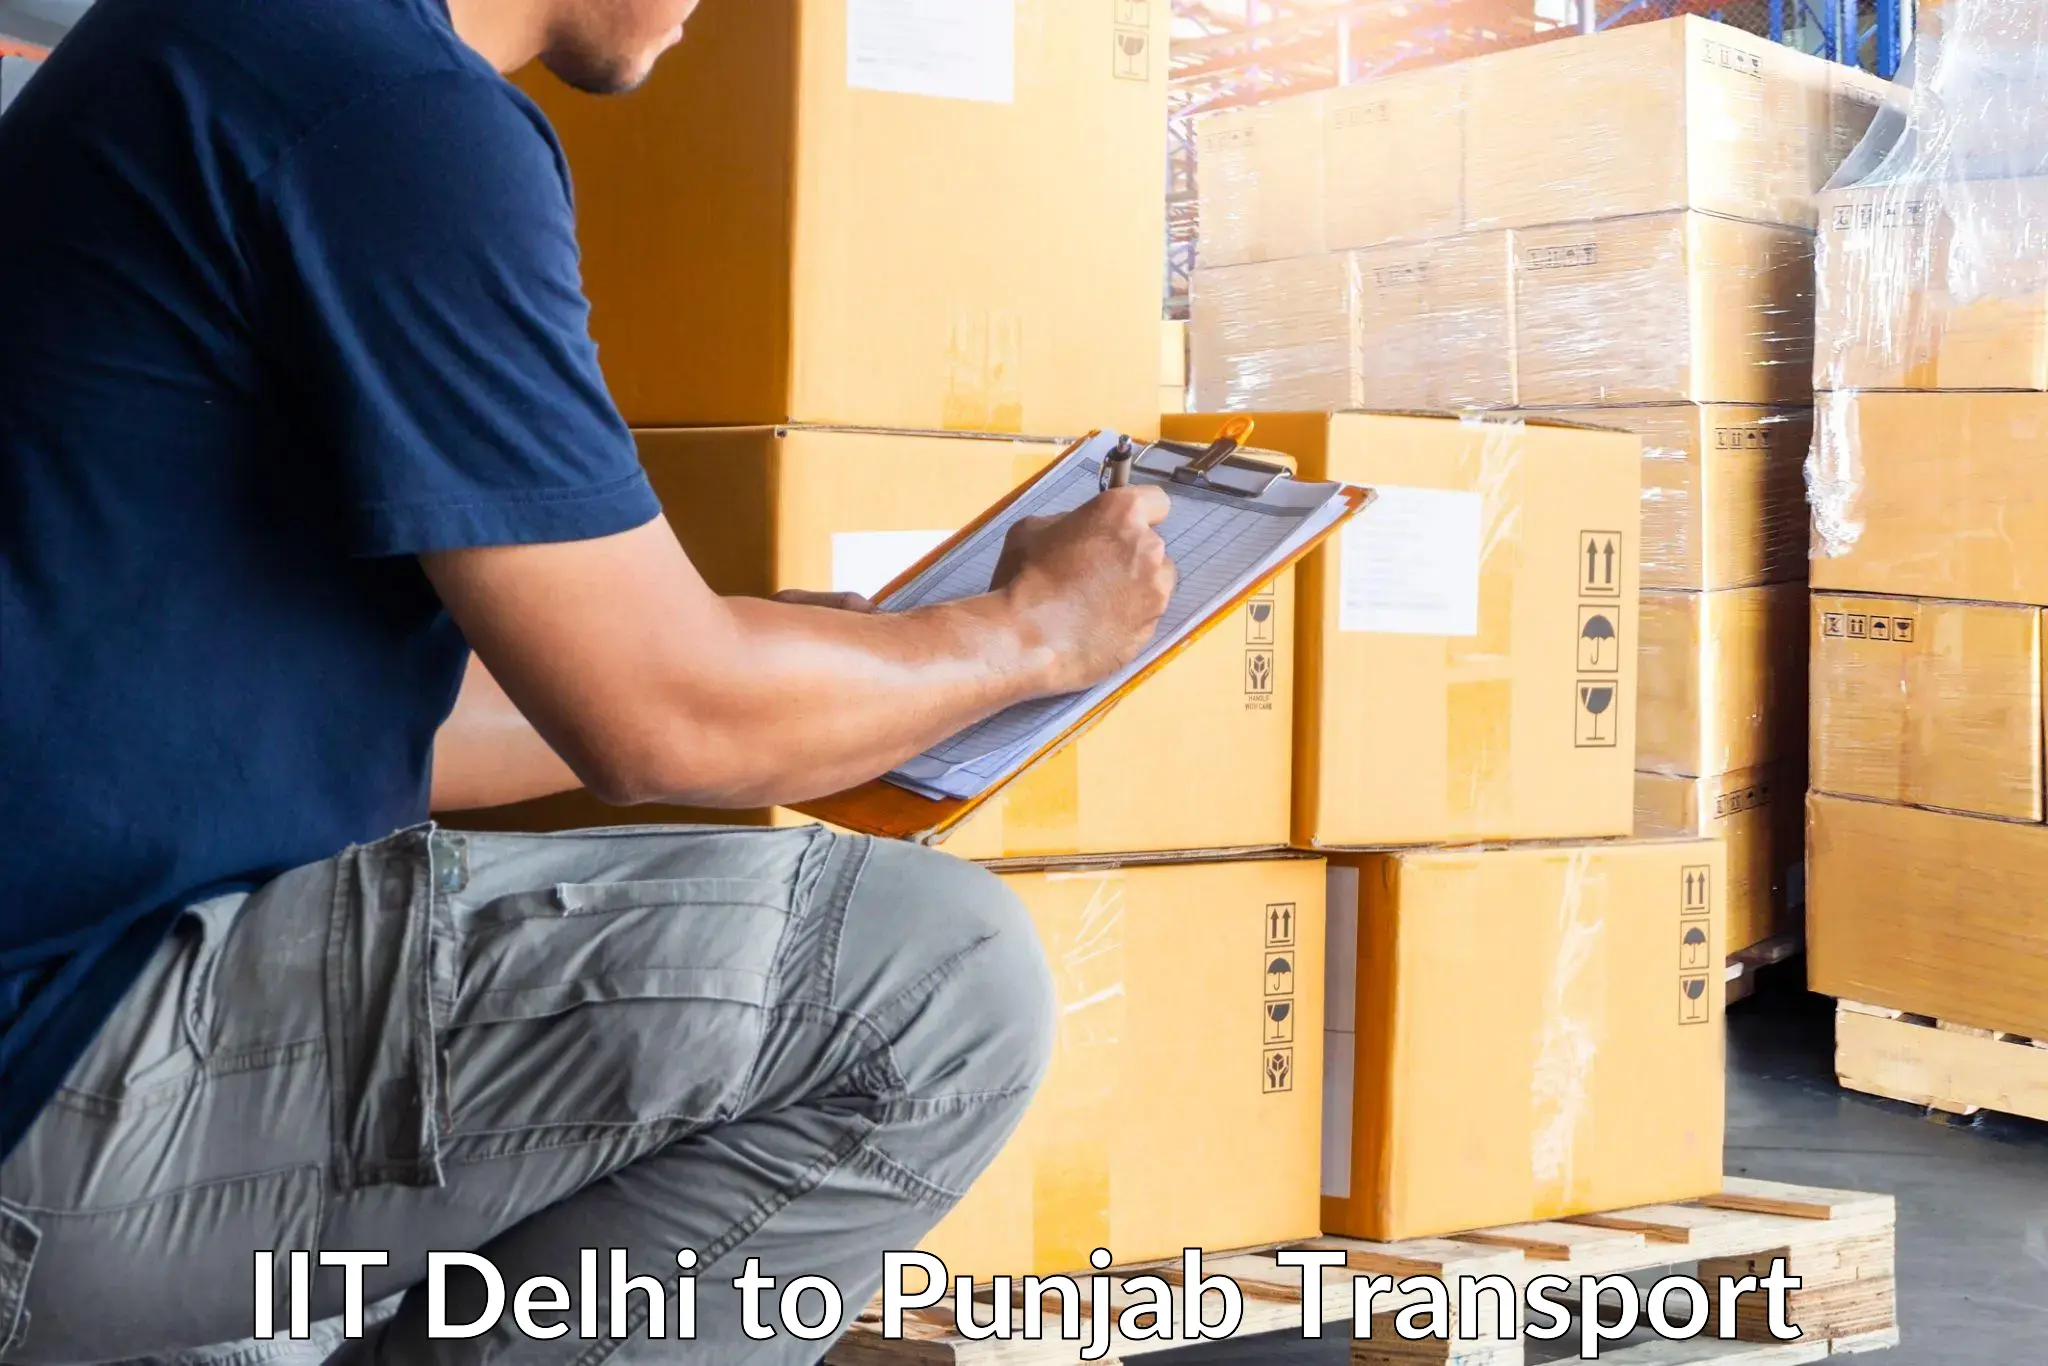 Furniture transport service IIT Delhi to Kotkapura